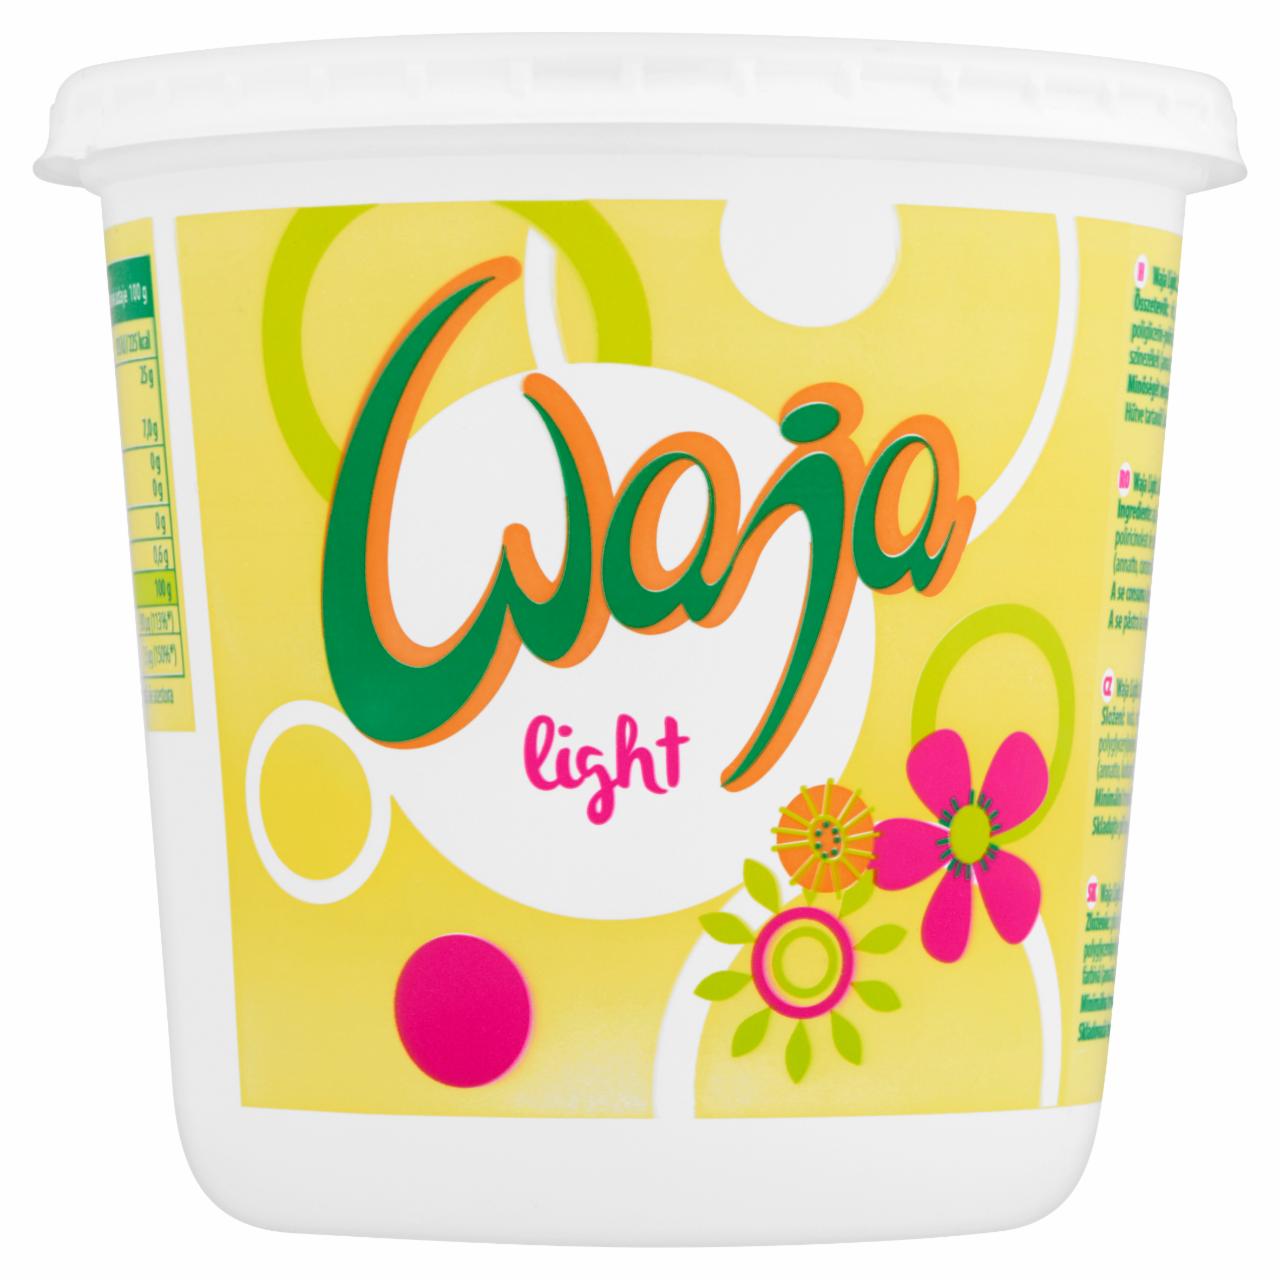 Képek - Waja Light 25% zsírtartalmú margarin 1000 g